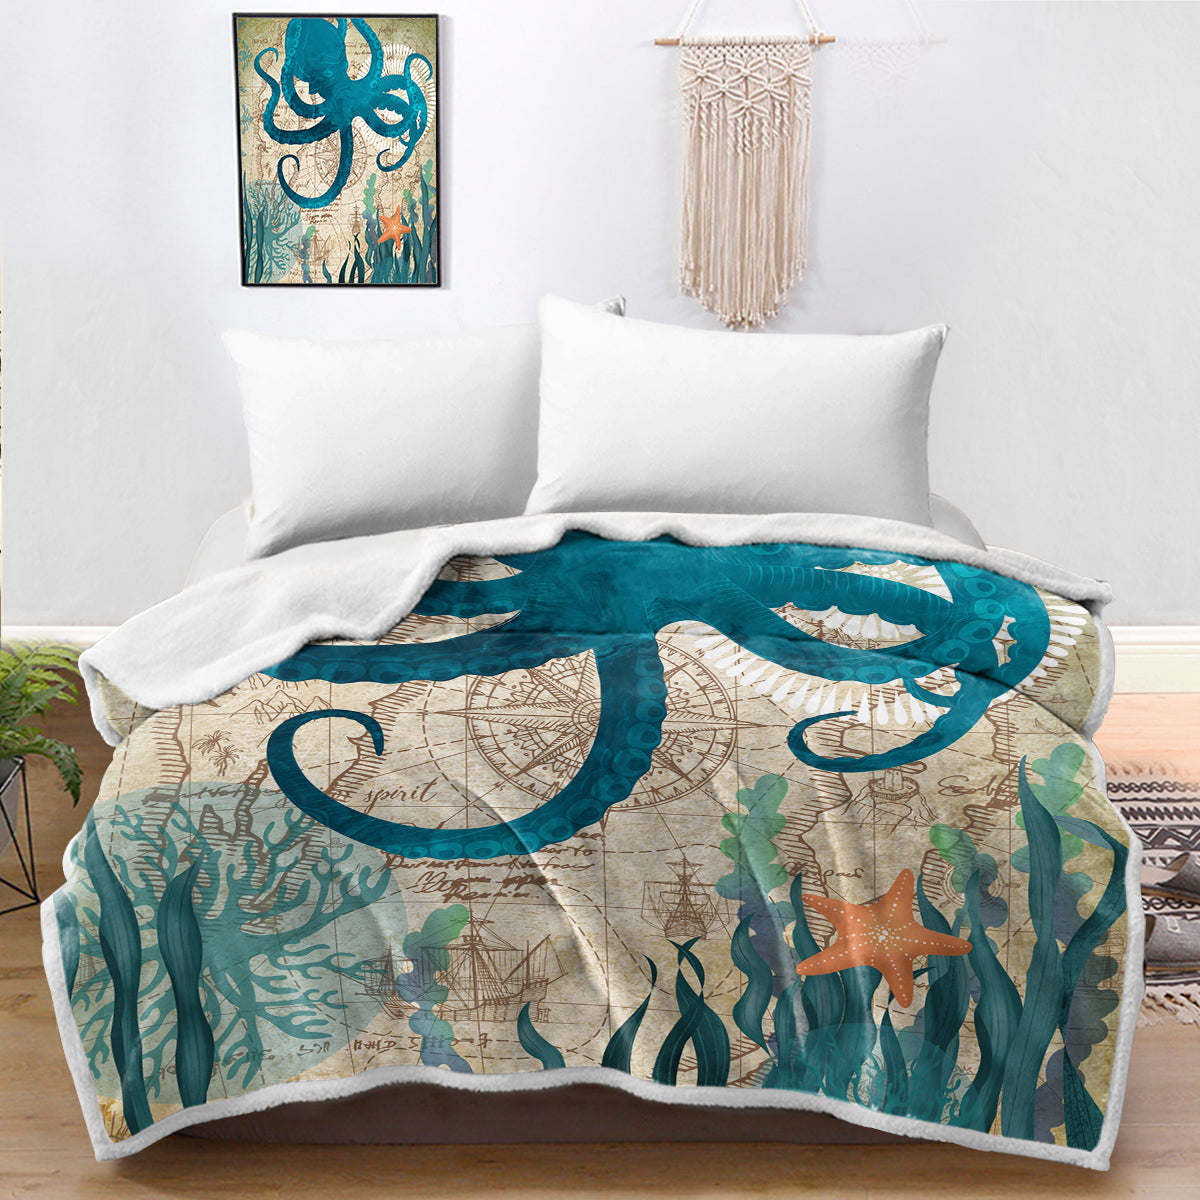 Octopus Love Bedspread Blanket